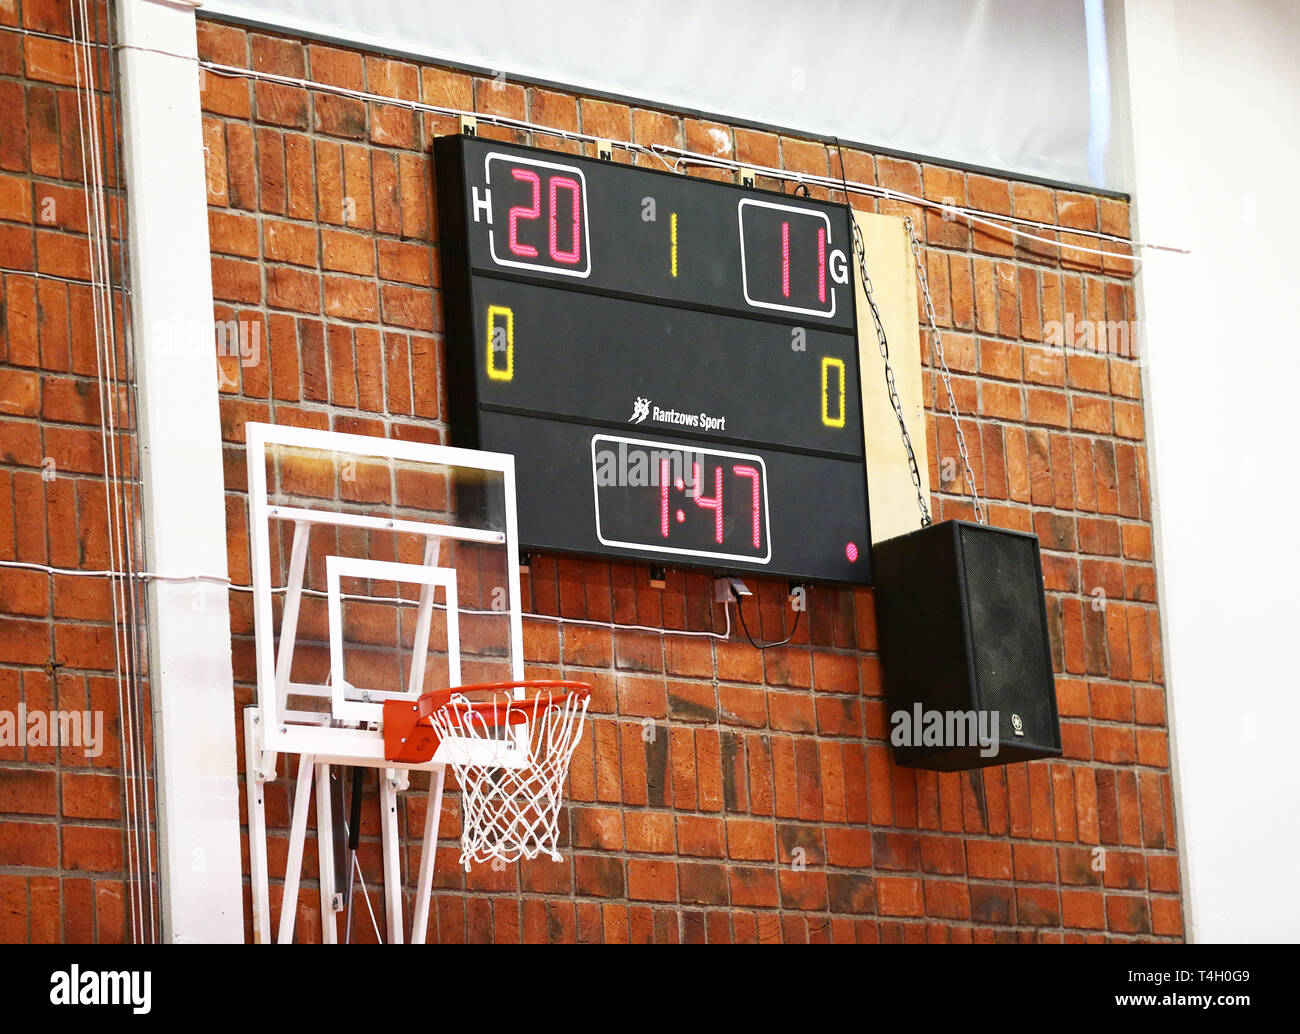 Basketball basket scoreboard in a sports hall Stock Photo - Alamy